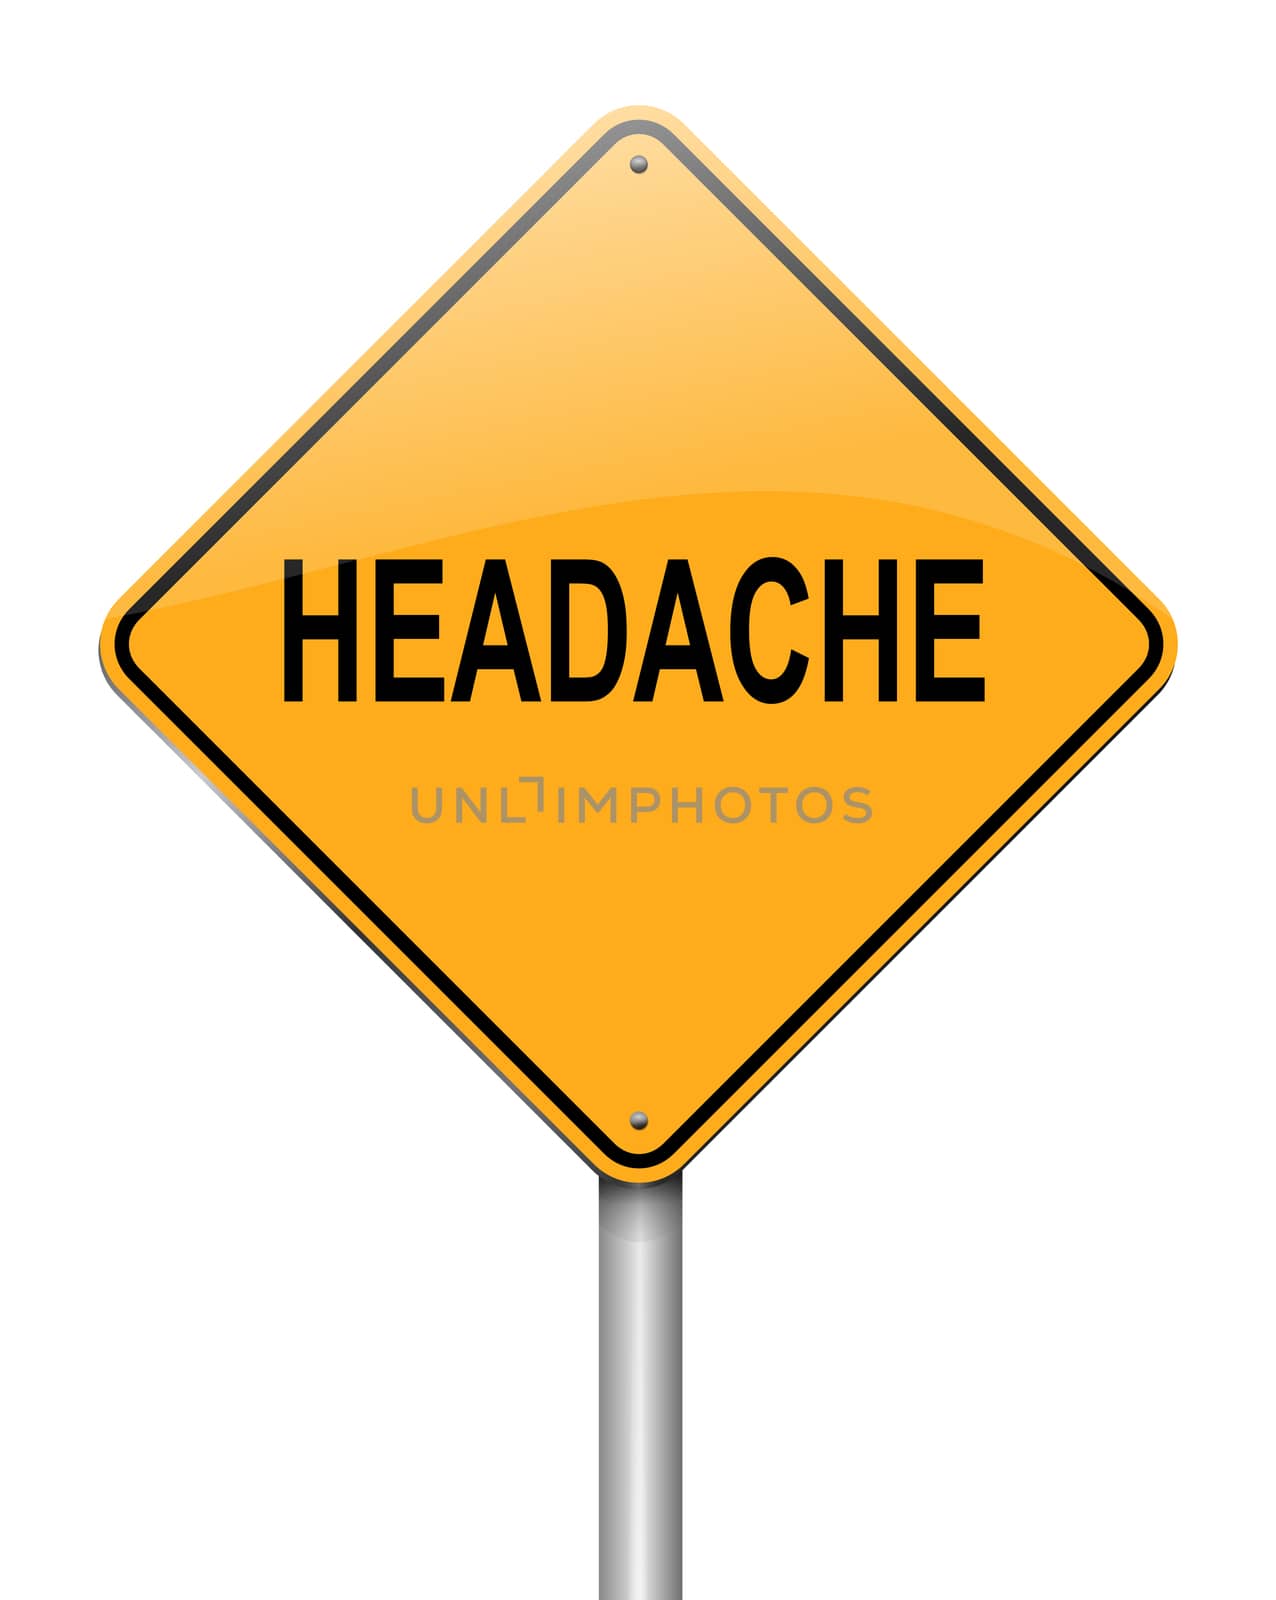 Headache concept. by 72soul